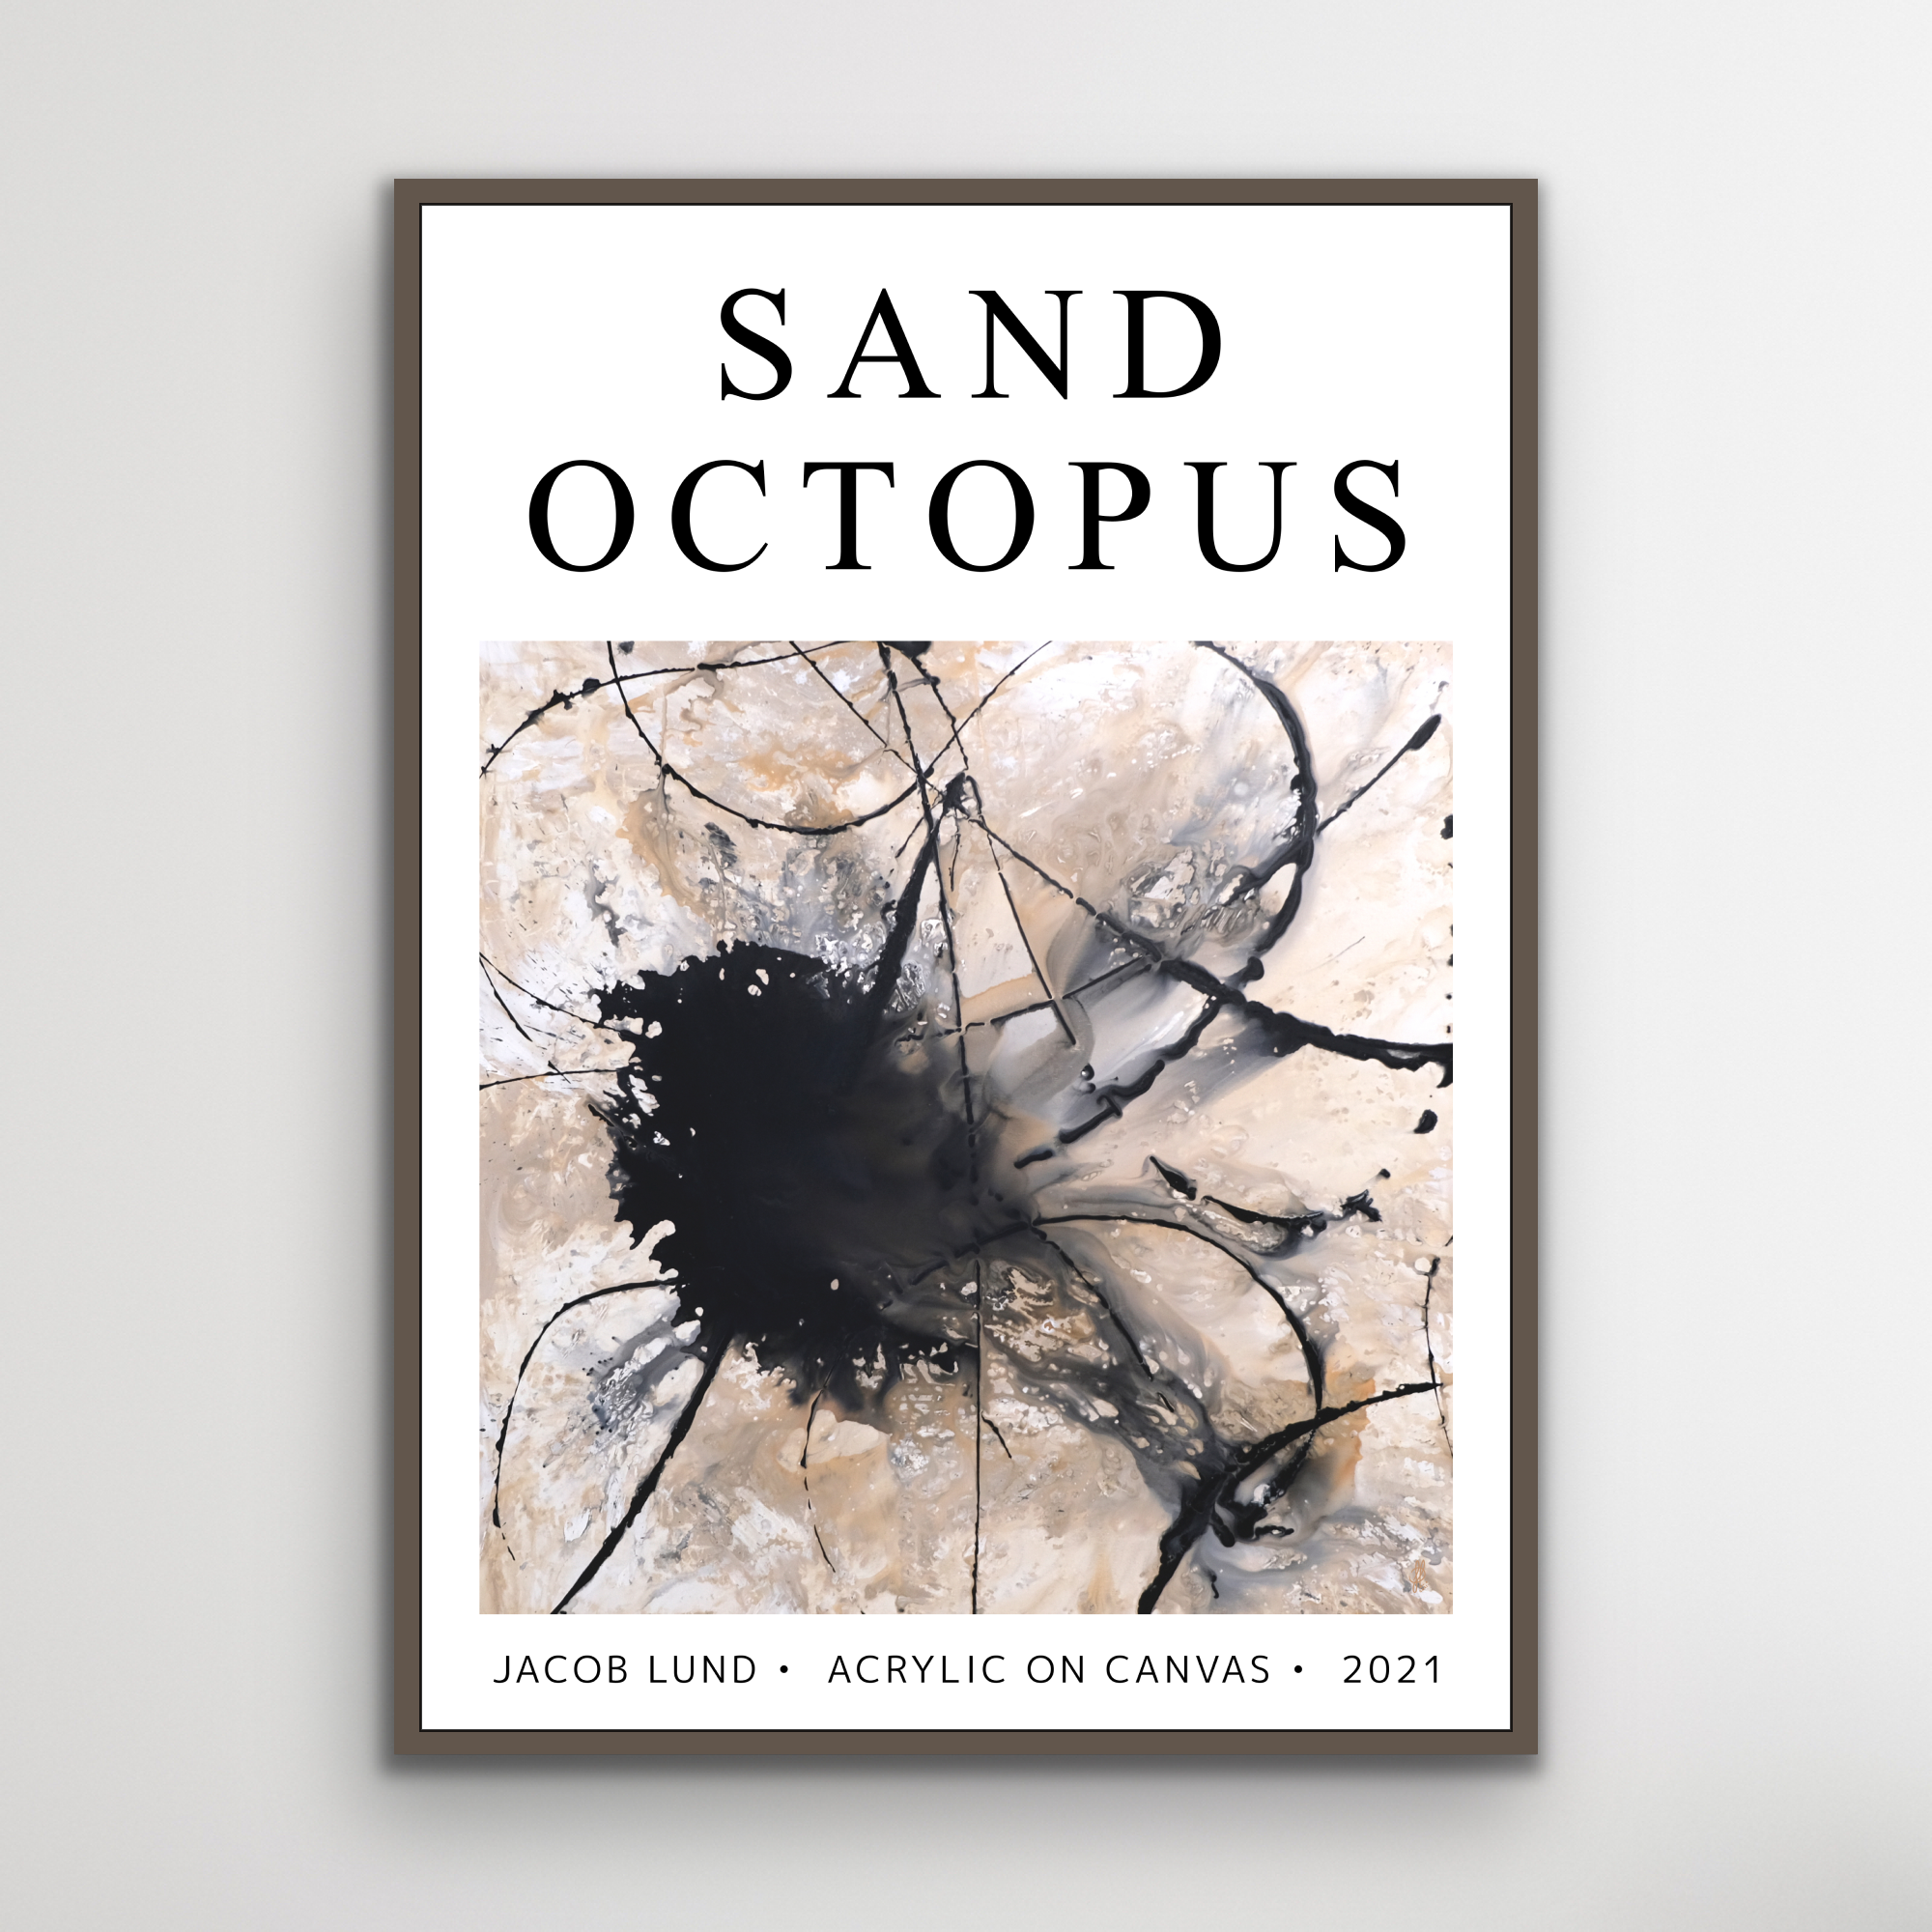 Plakat: "Sand Octopus" (hvid baggrund)